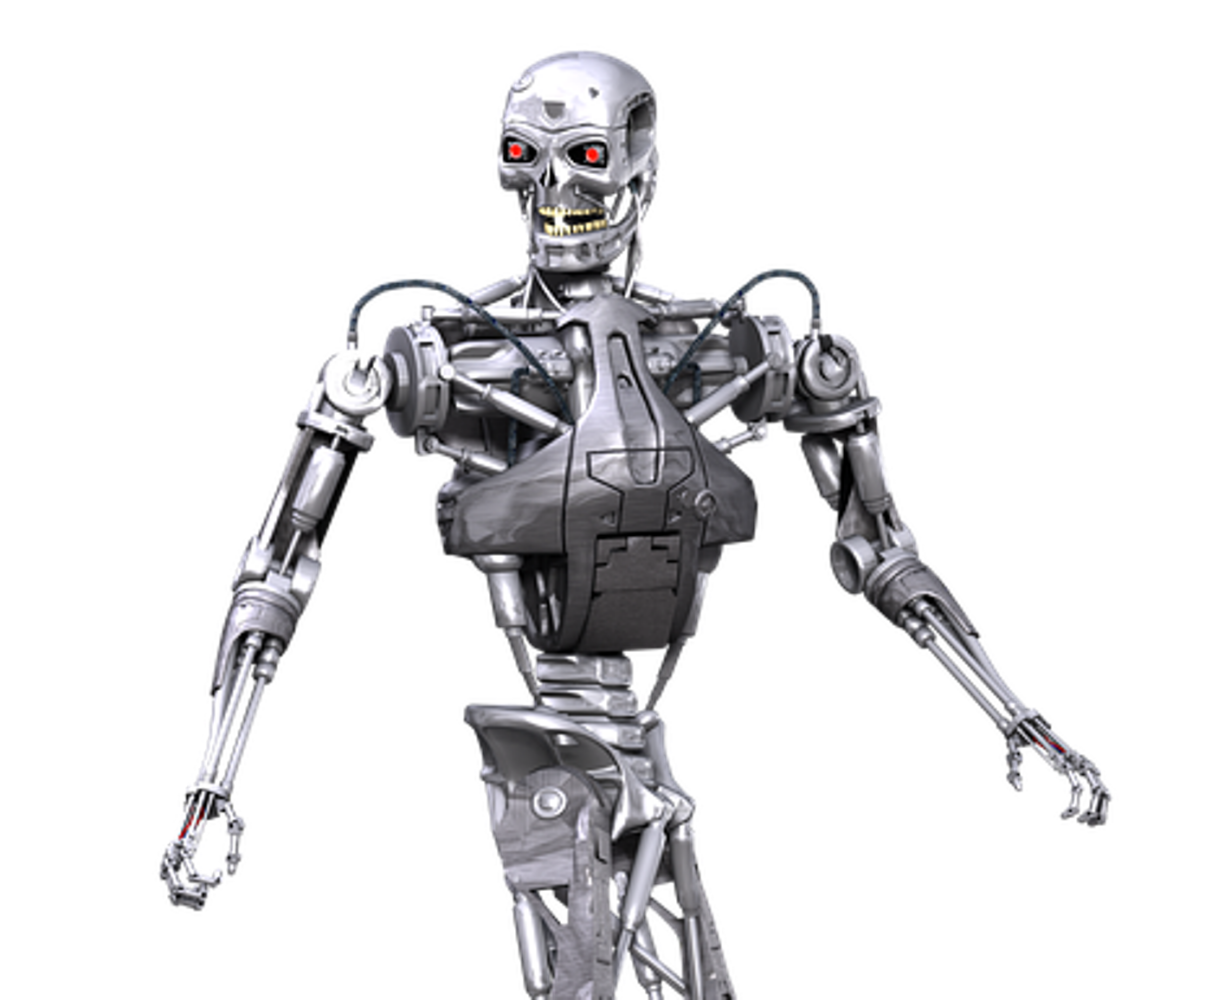 Нападение роботов. Robot Attack. Астро бот. Robot attacker. Artificial Intelligence.